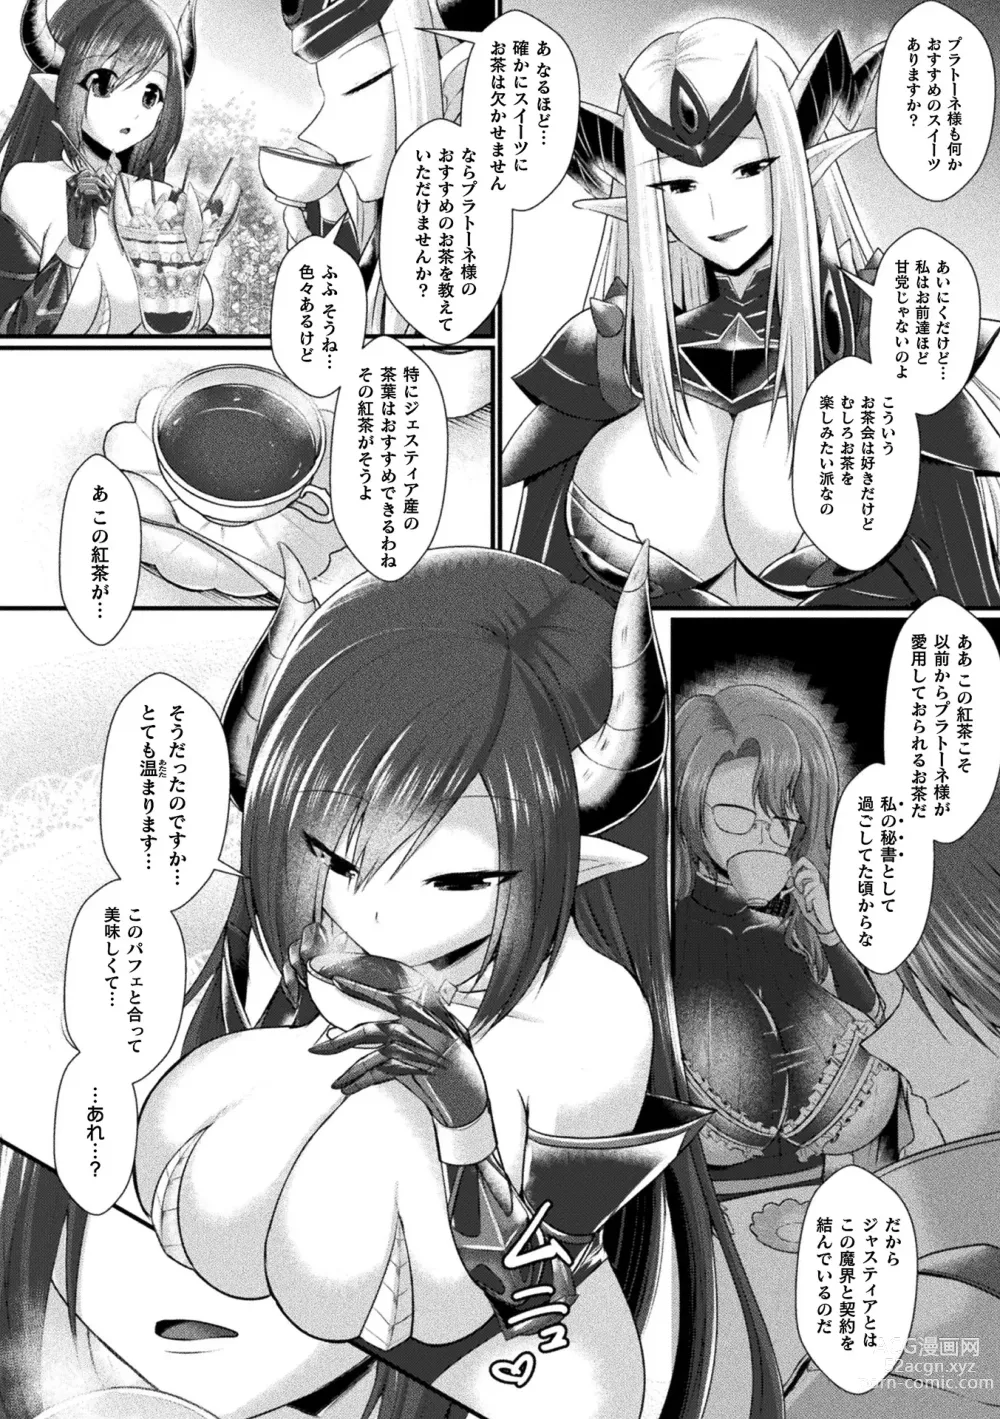 Page 190 of manga Kairaku Dain Desespoir